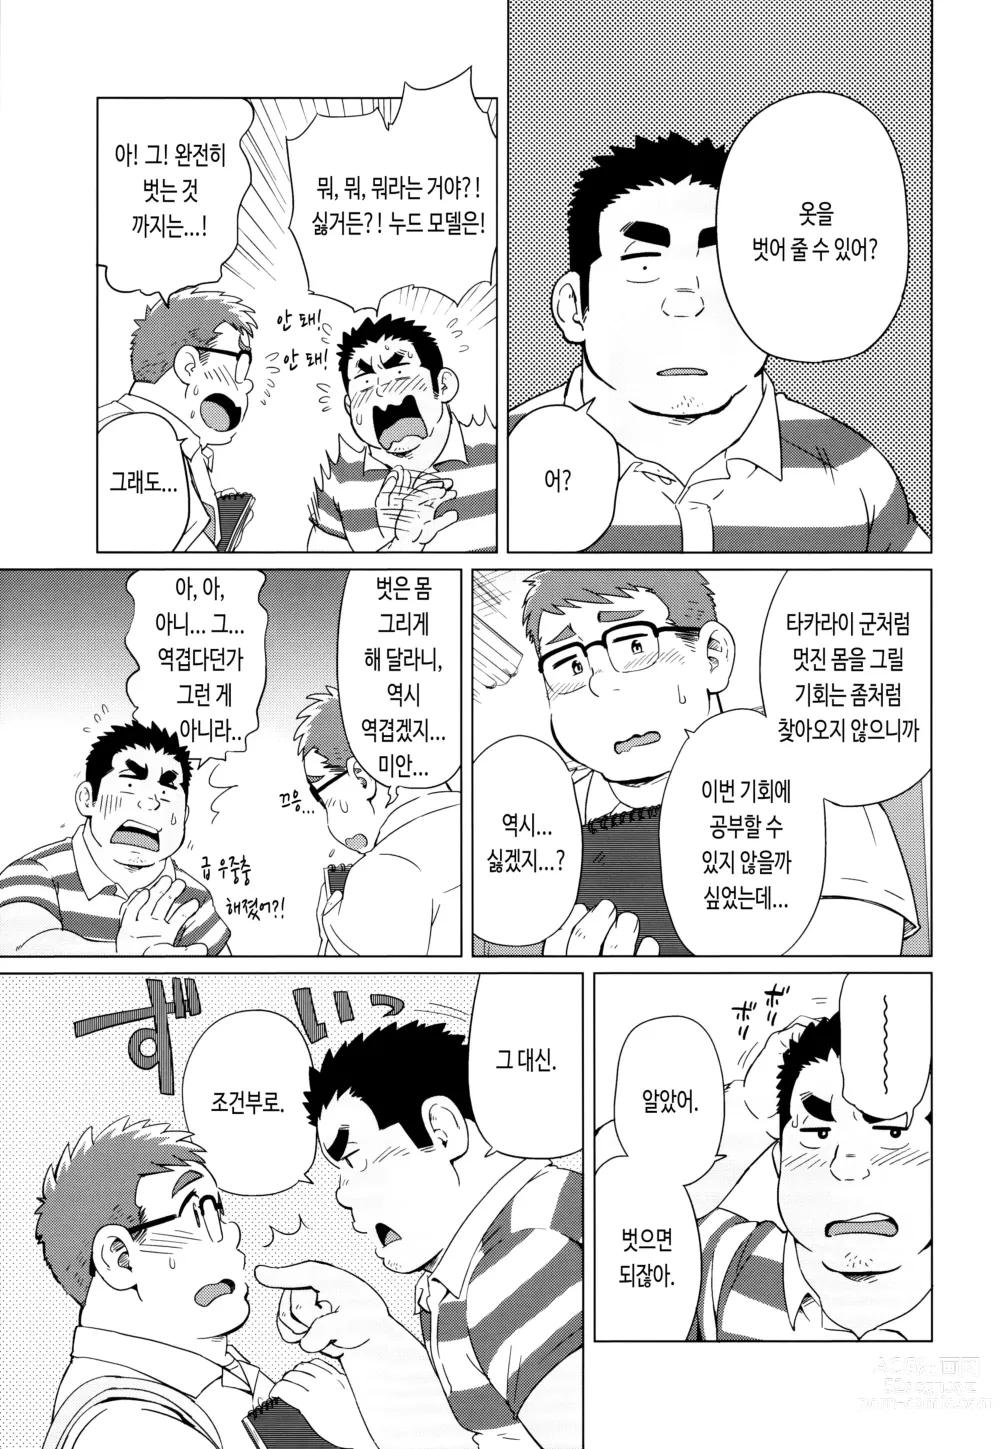 Page 7 of doujinshi 조건부로.